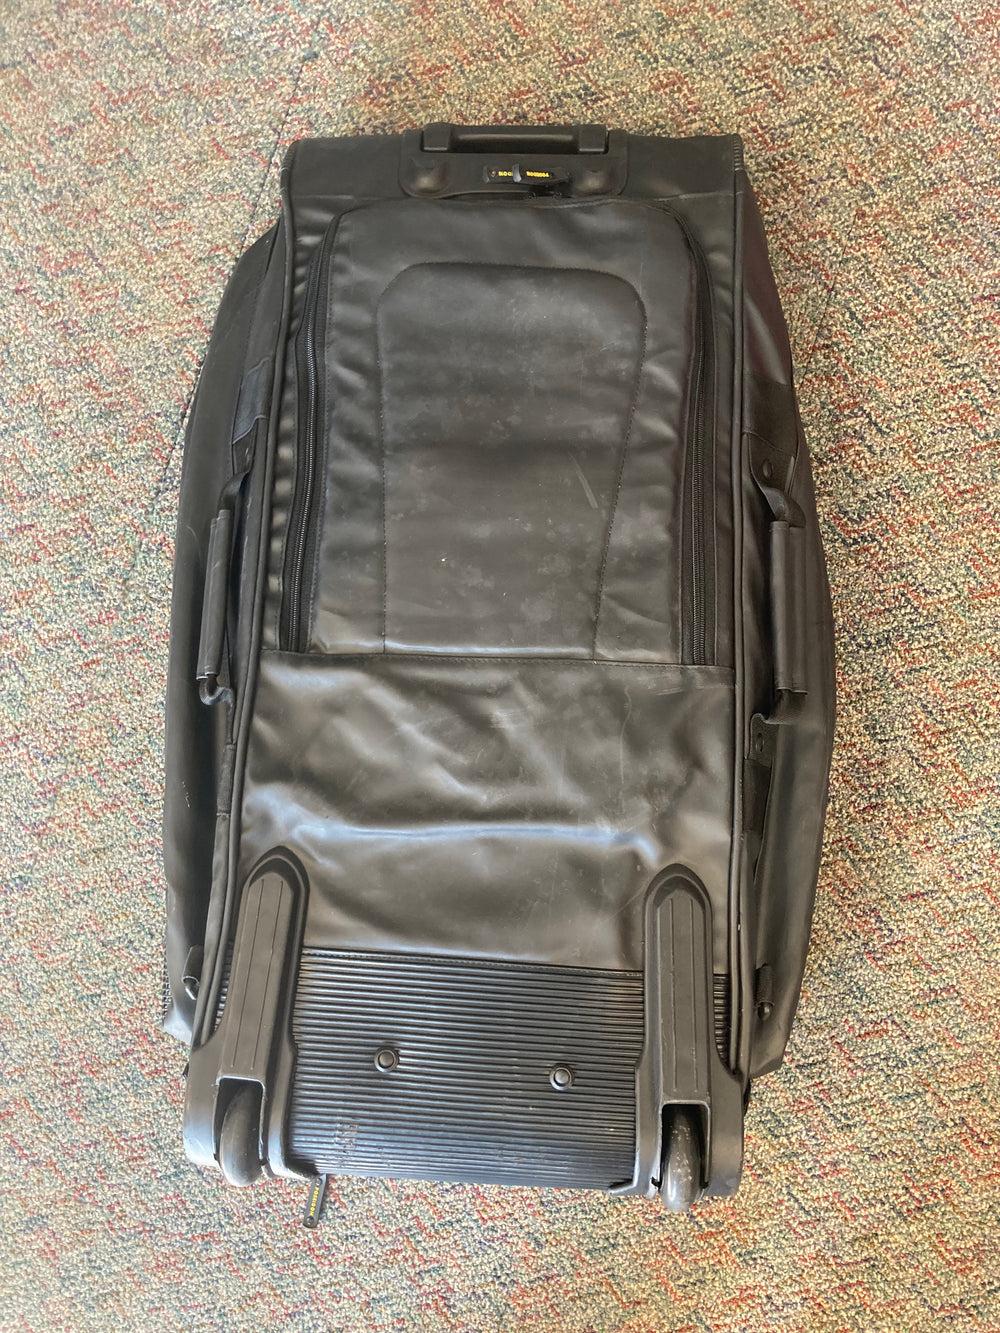 Poseidon Roller Luggage Bag : Secondhand